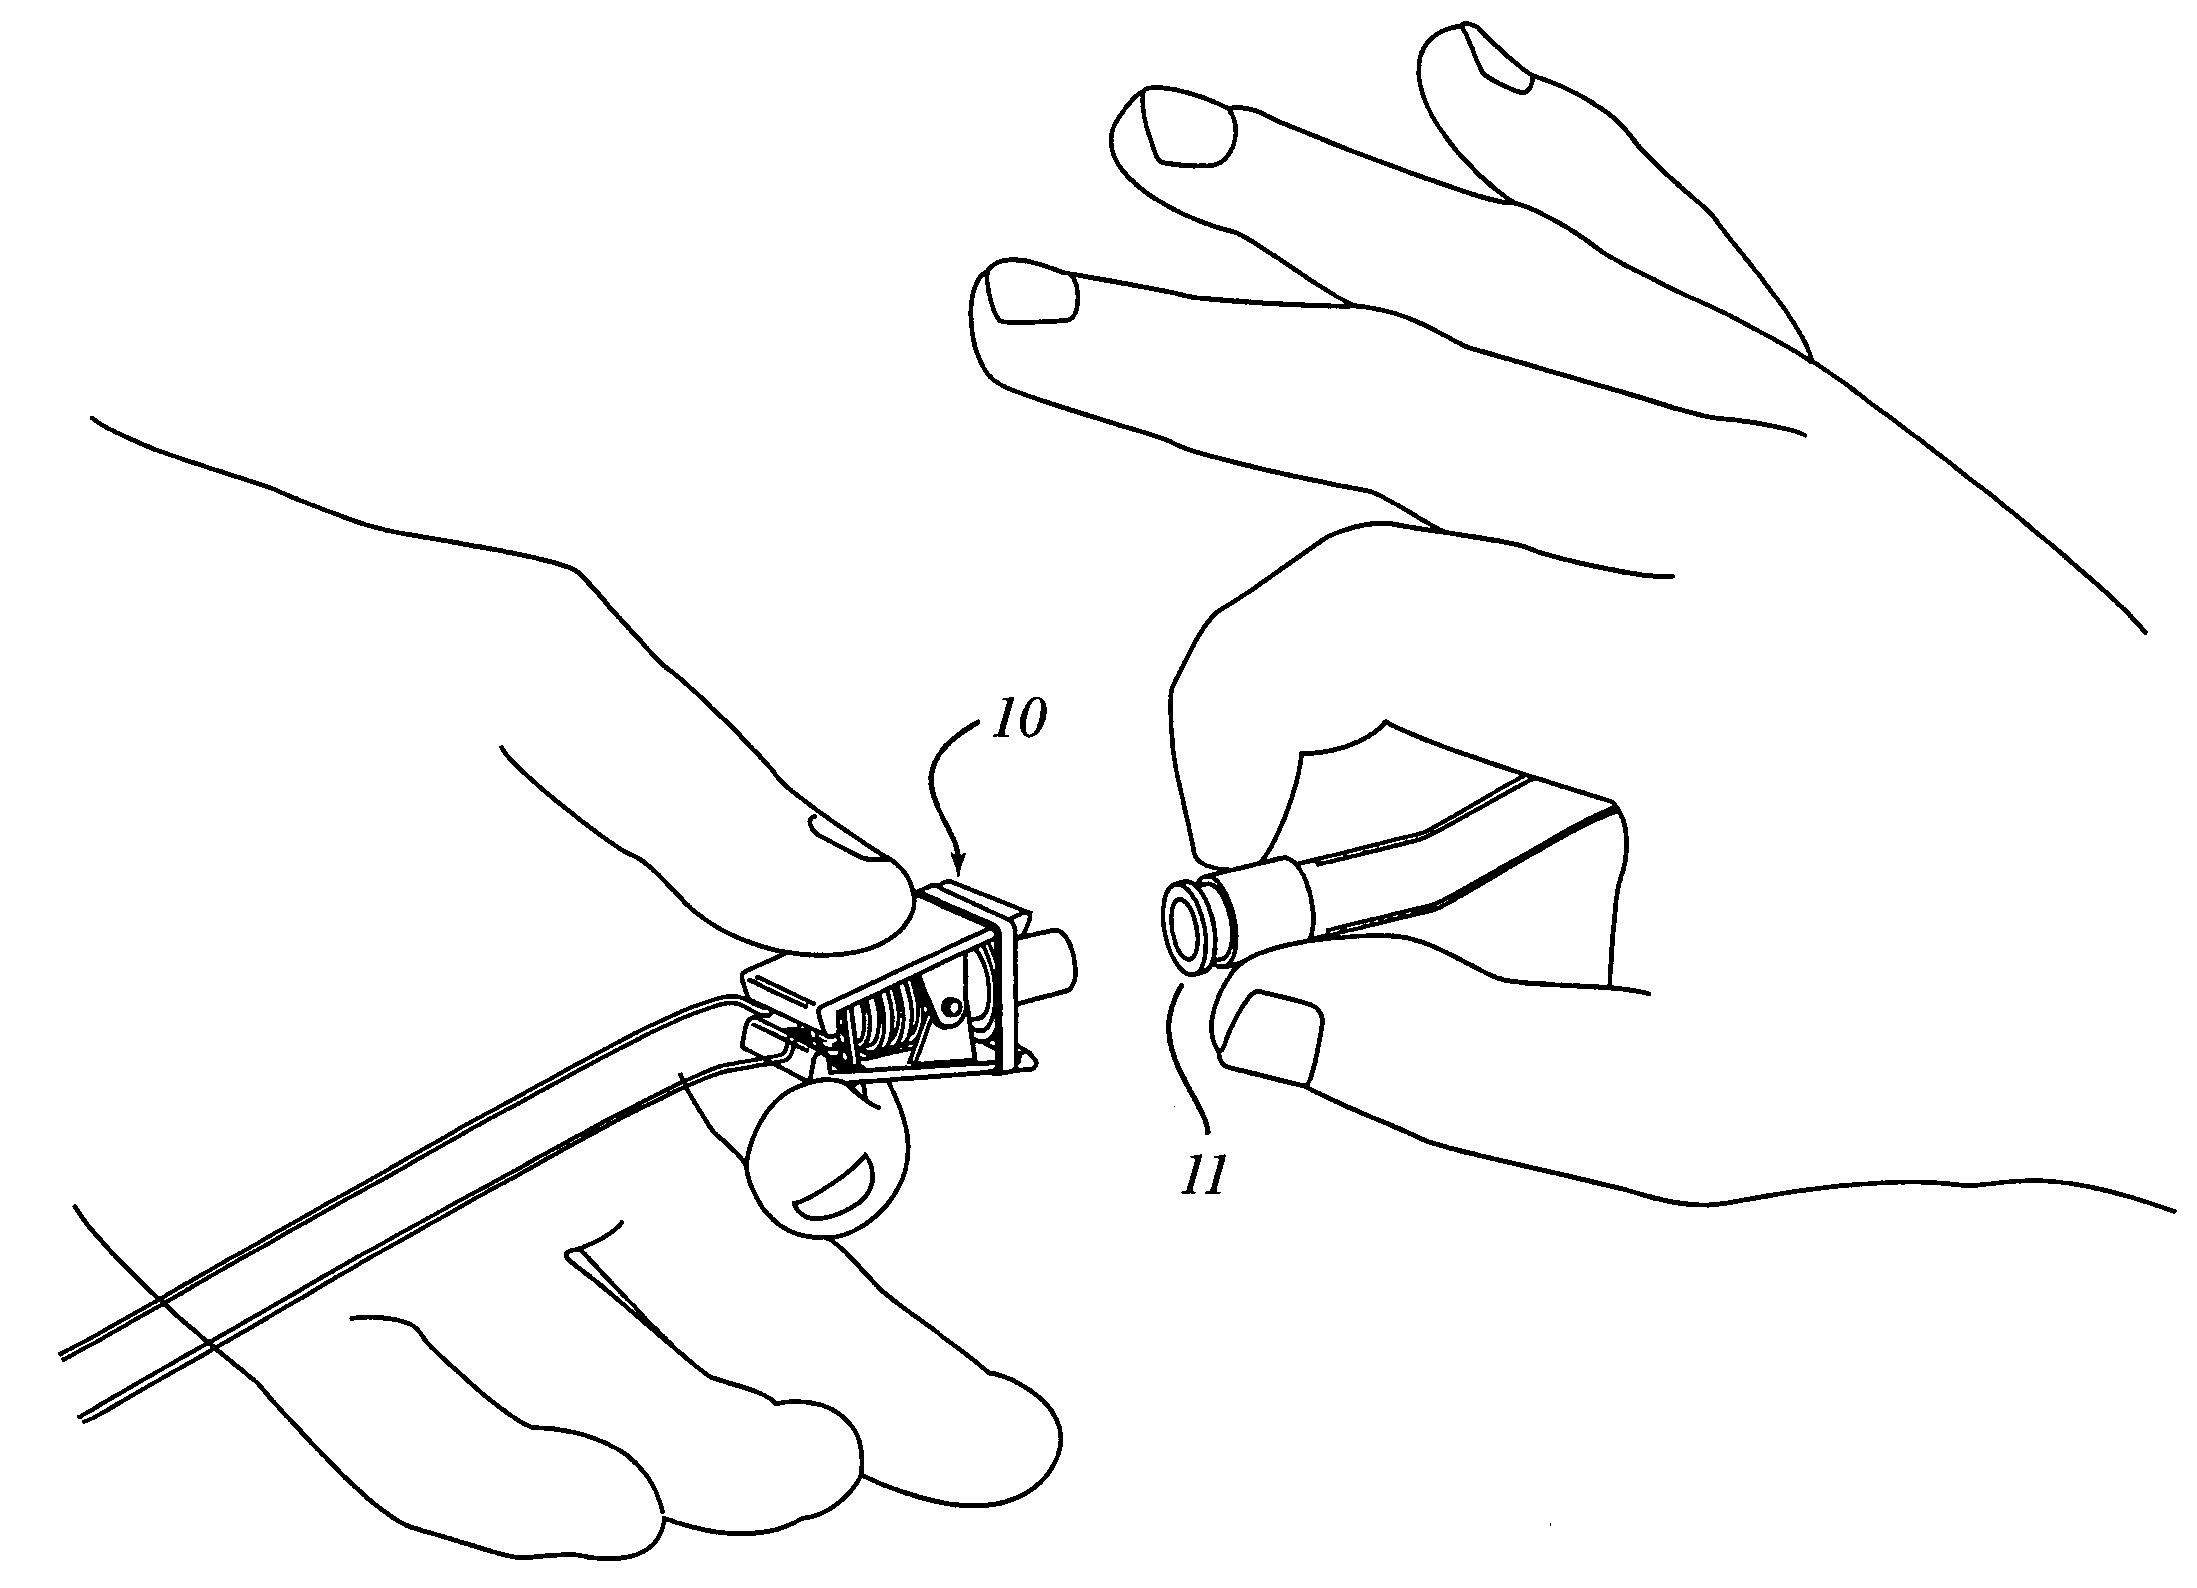 Medical tubing quick disconnect apparatus